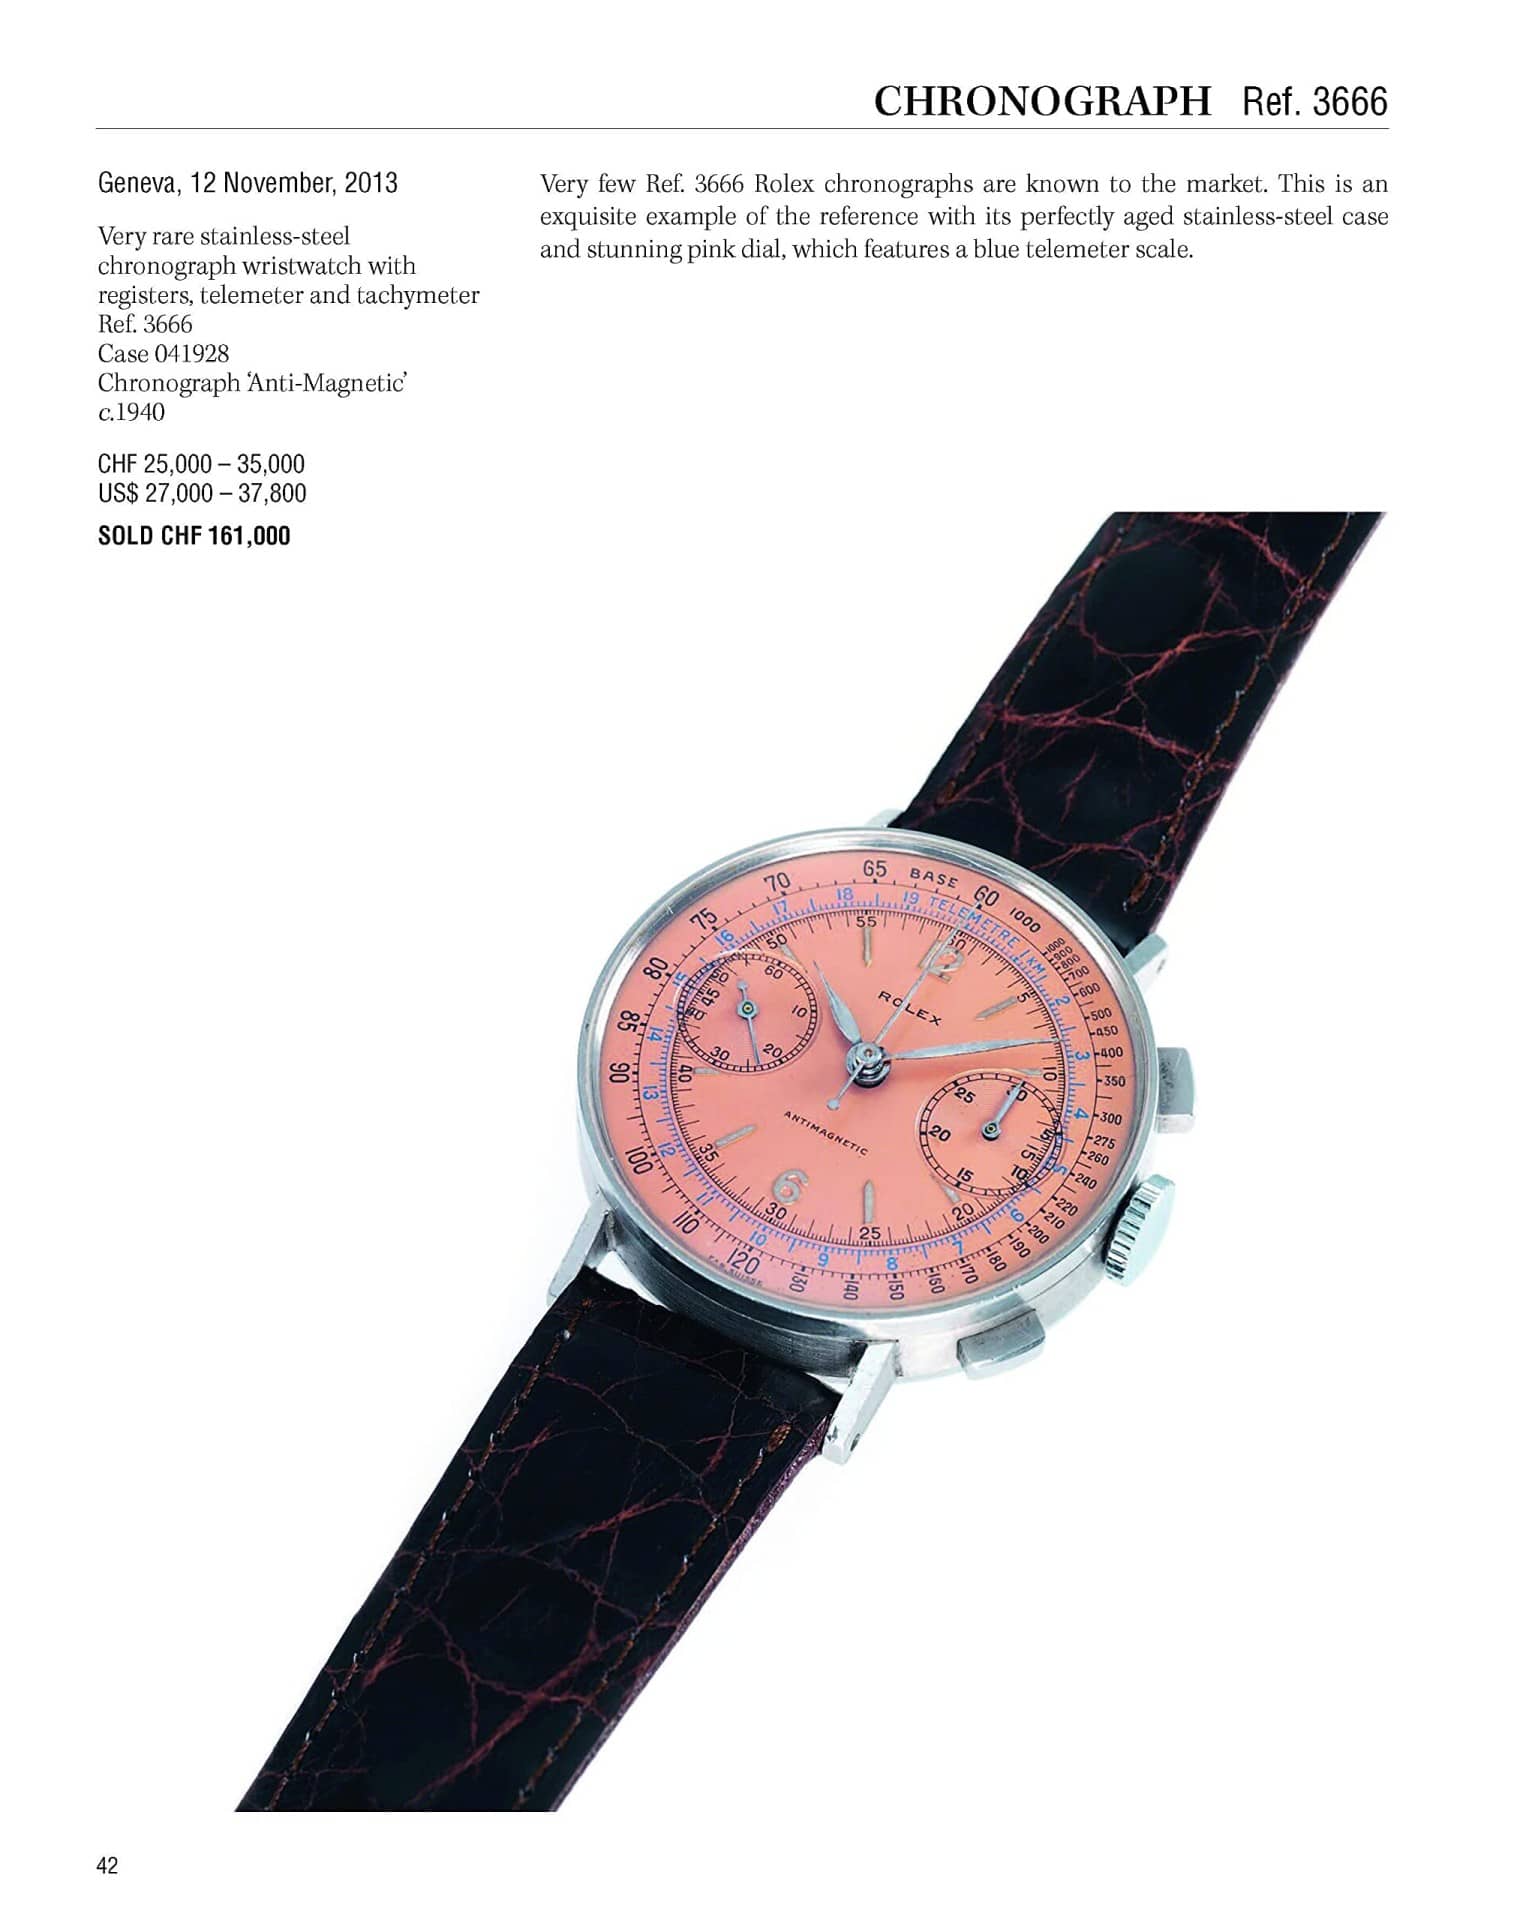 11580-rolex-investing-in-wristwatches-711koops8cl-jpg-711koops8cl